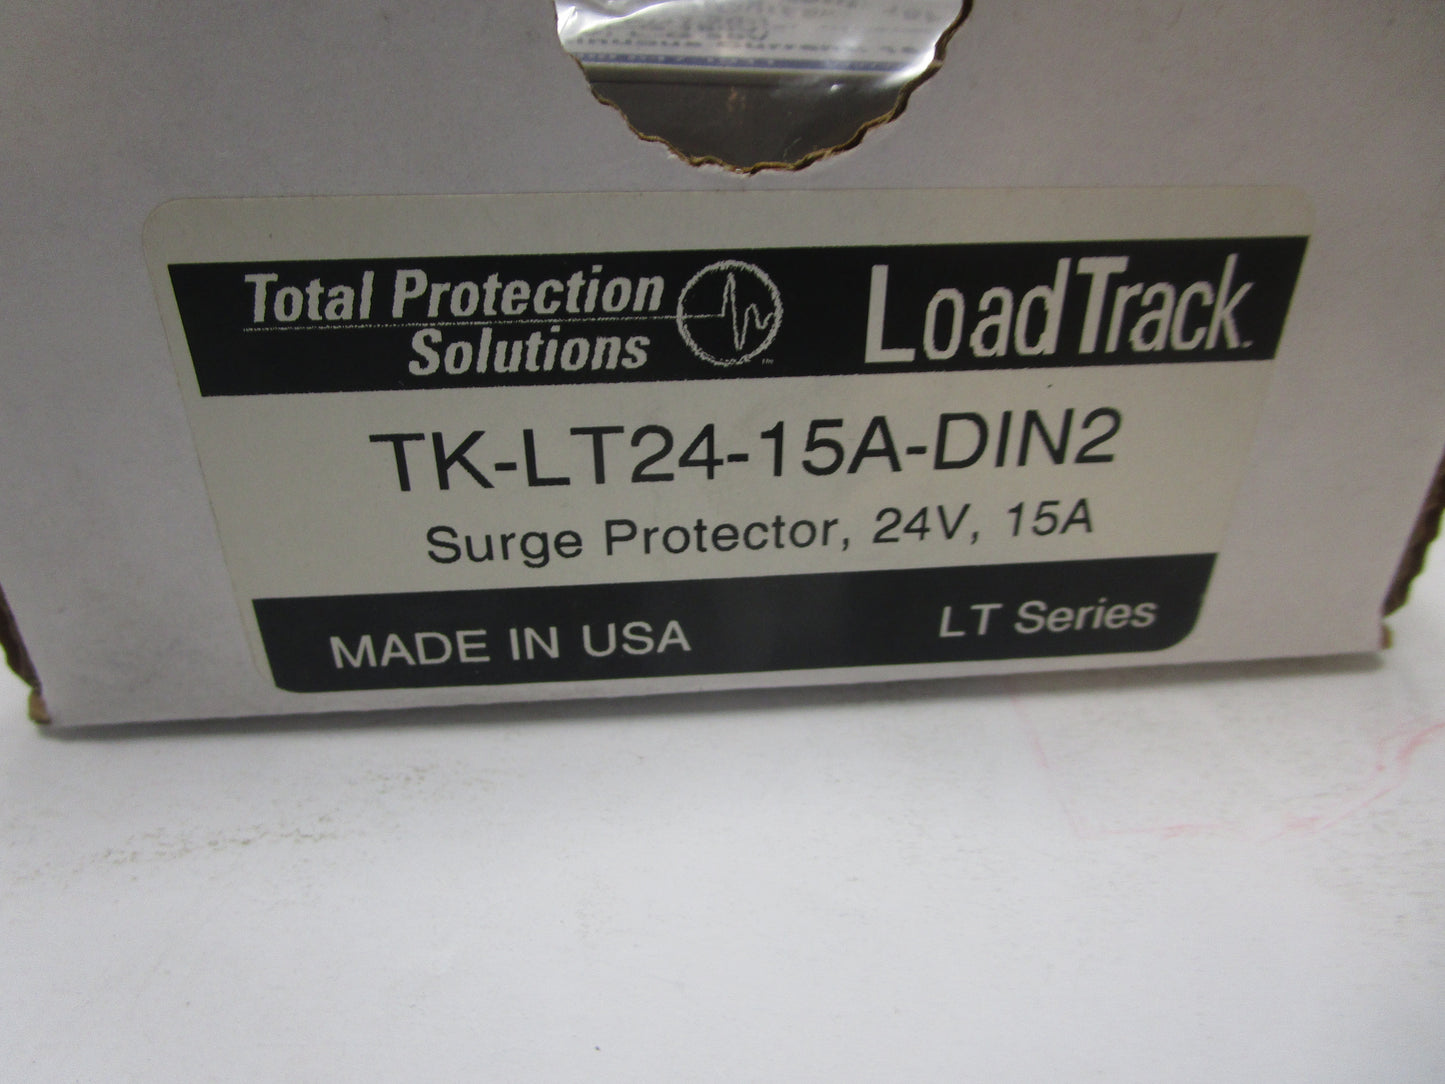 Total Protection Solutions LoadTrack Series TK-LT24-15A-DIN2